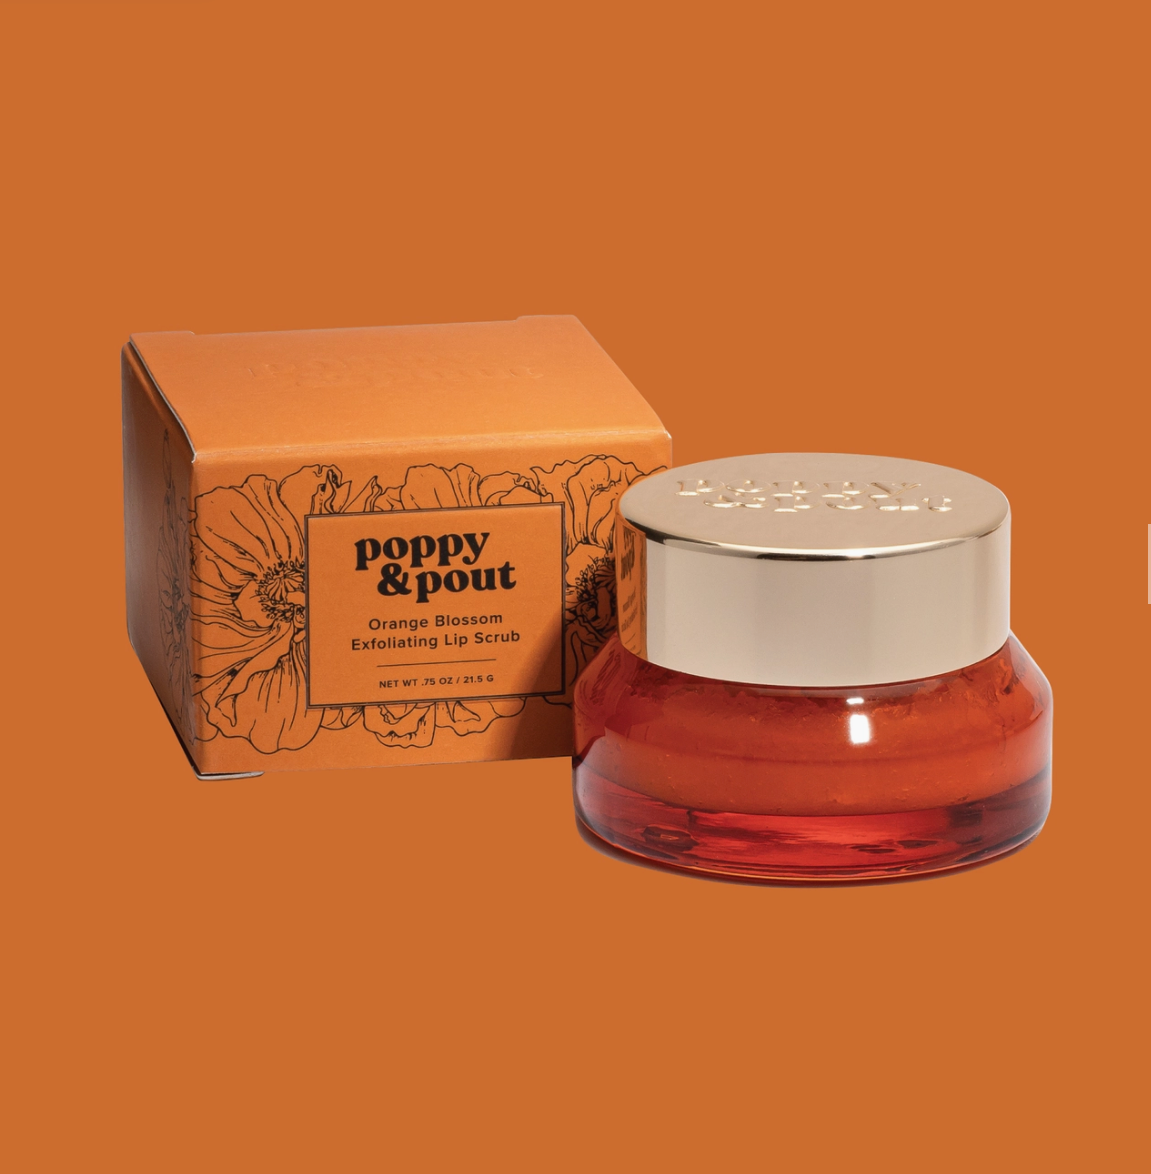 Poppy & Pout's Exfoliating Lip Scrubs 